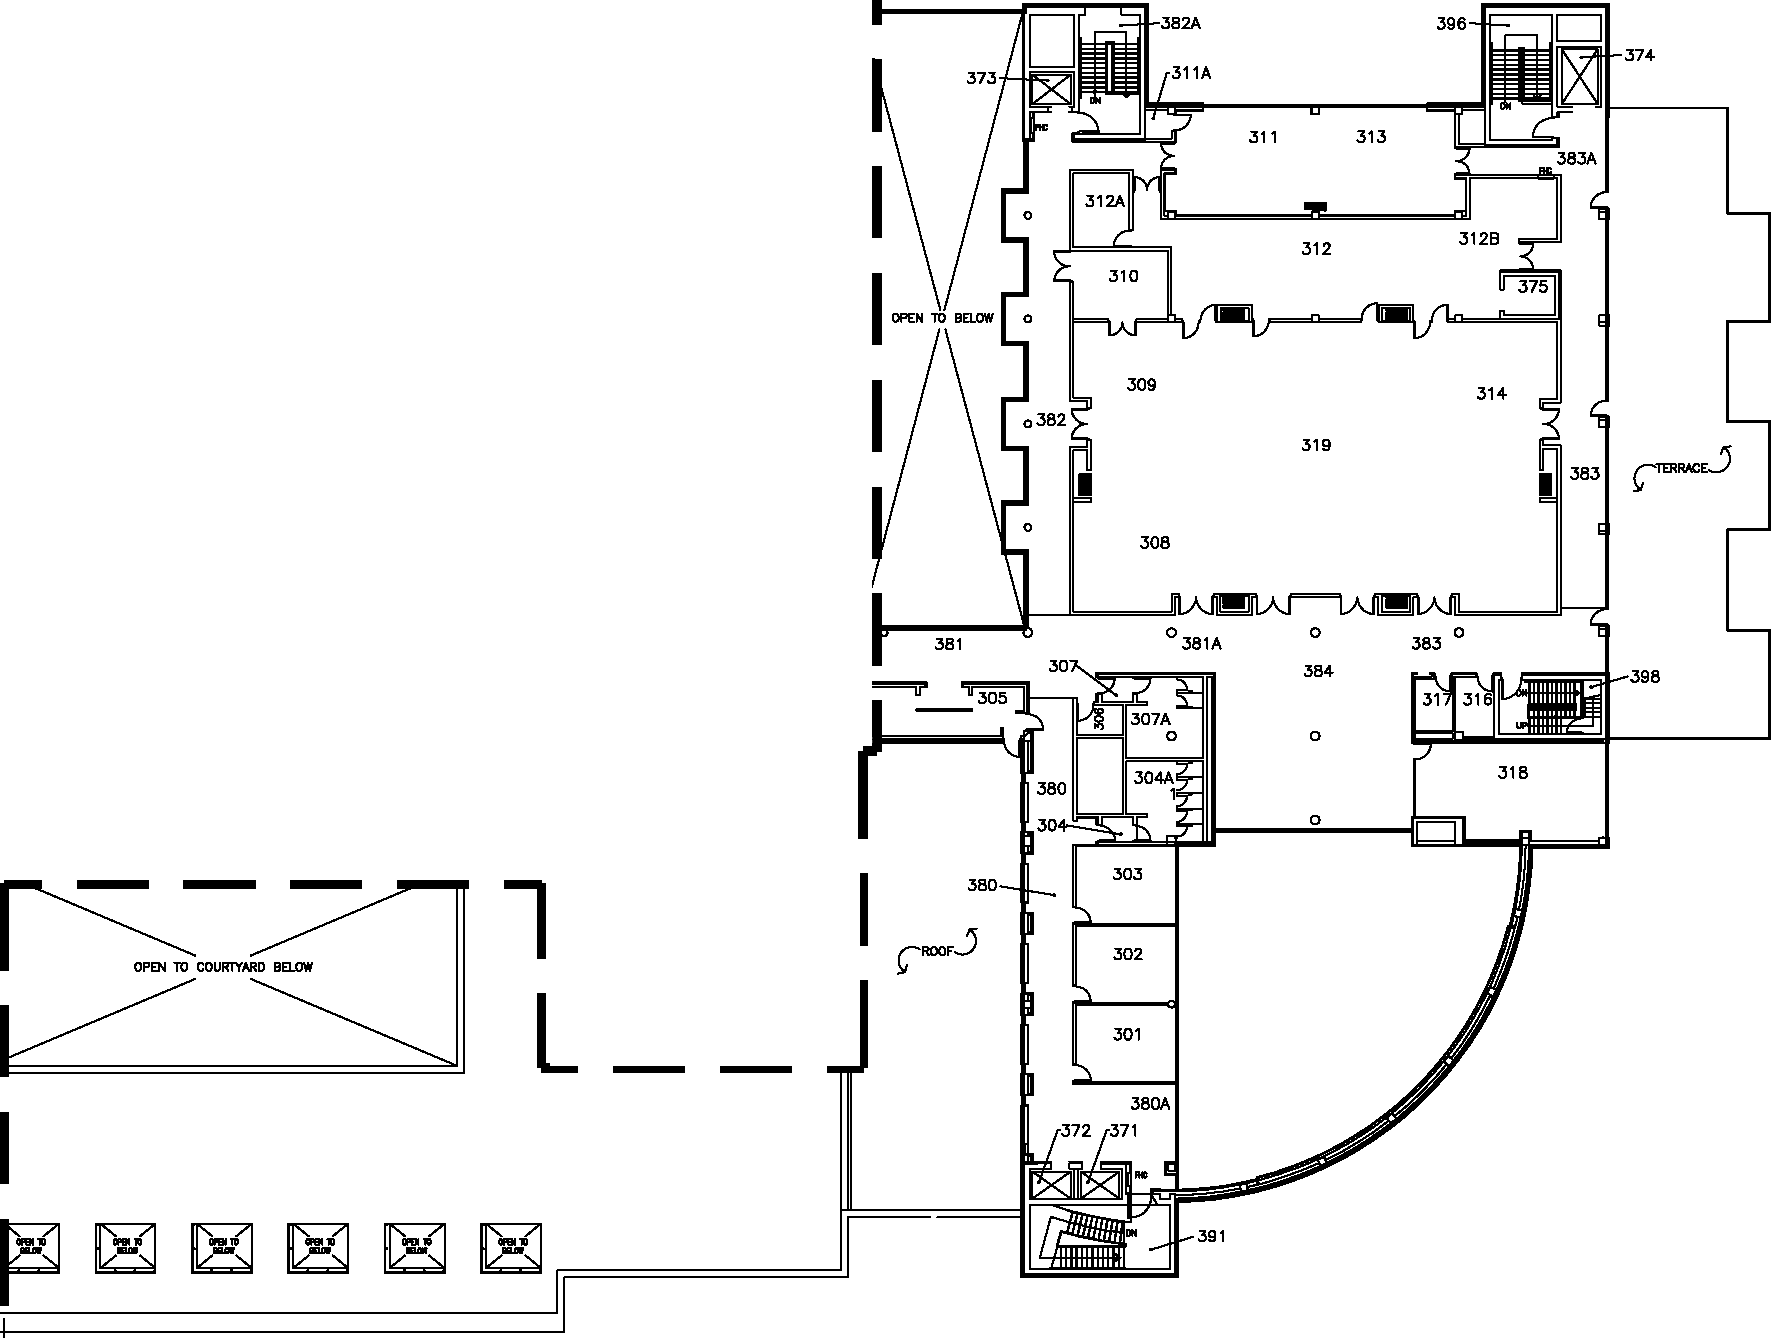 McMaster University Student Center (MUSC) - Third Floor Map